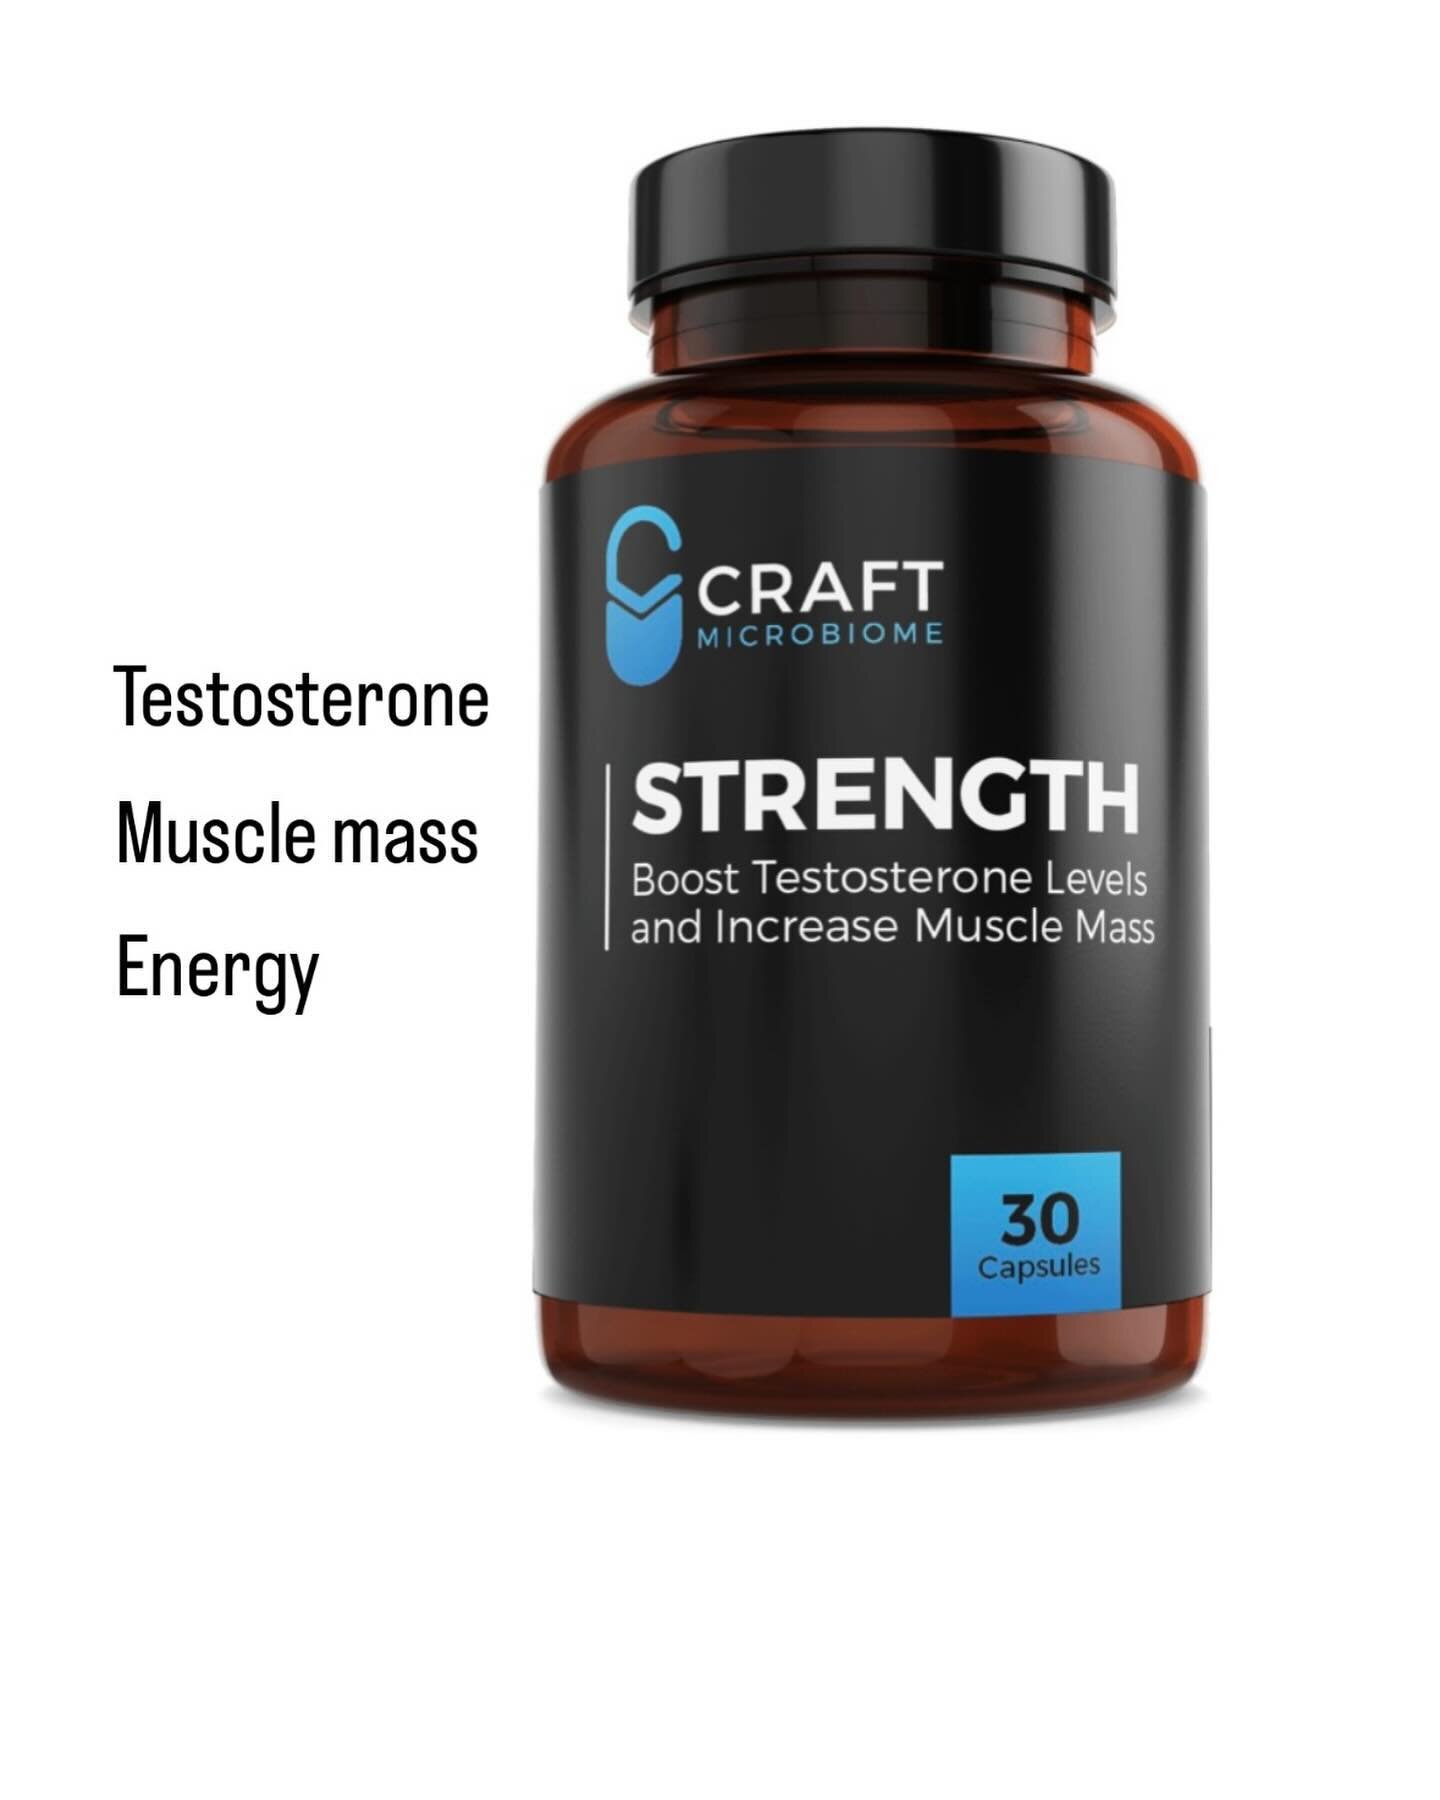 Testosterone ✅
Muscle mass ✅
Energy ✅